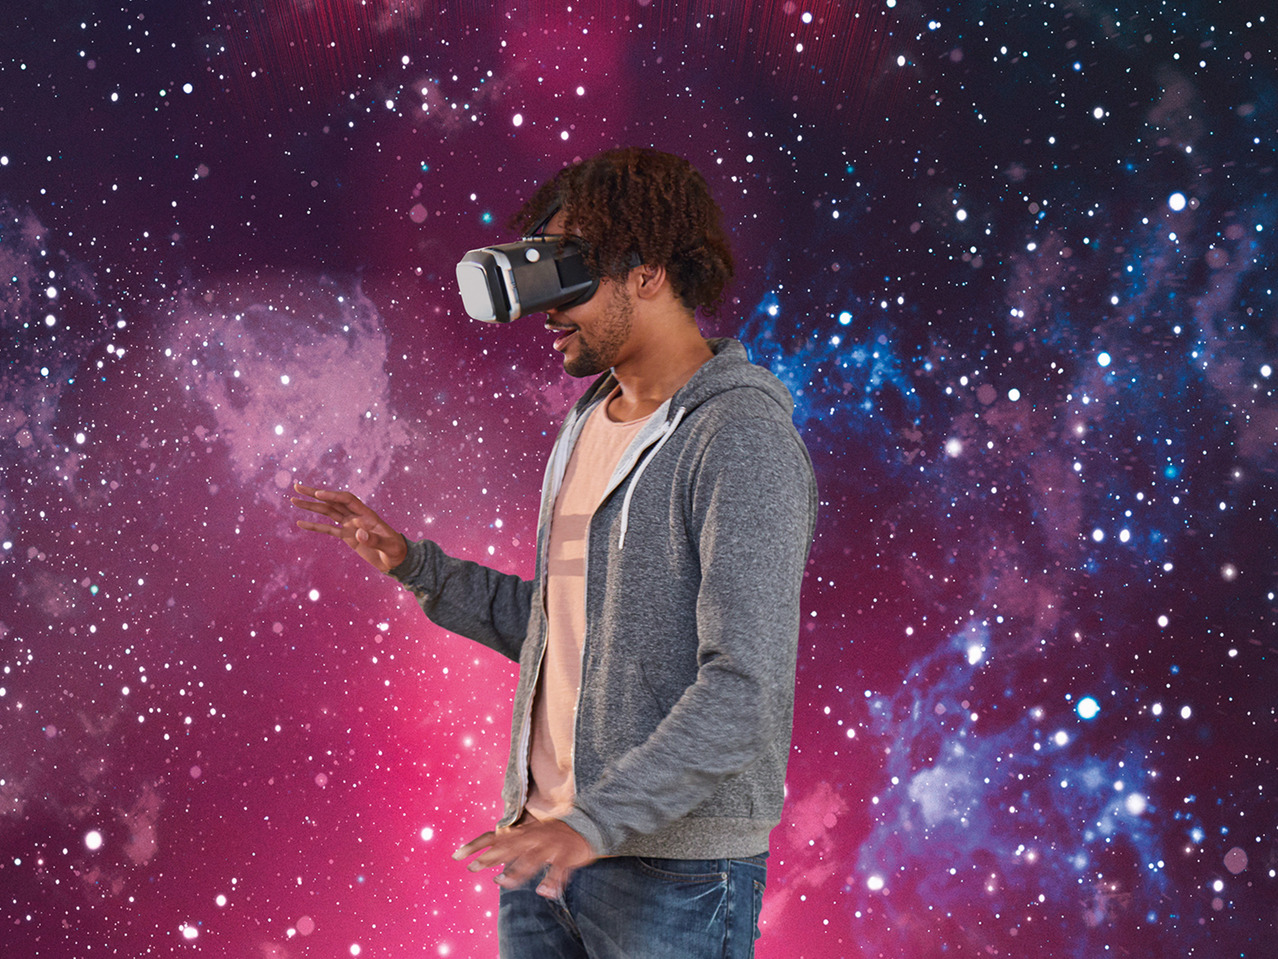 Silvercrest Virtual Reality Headset1